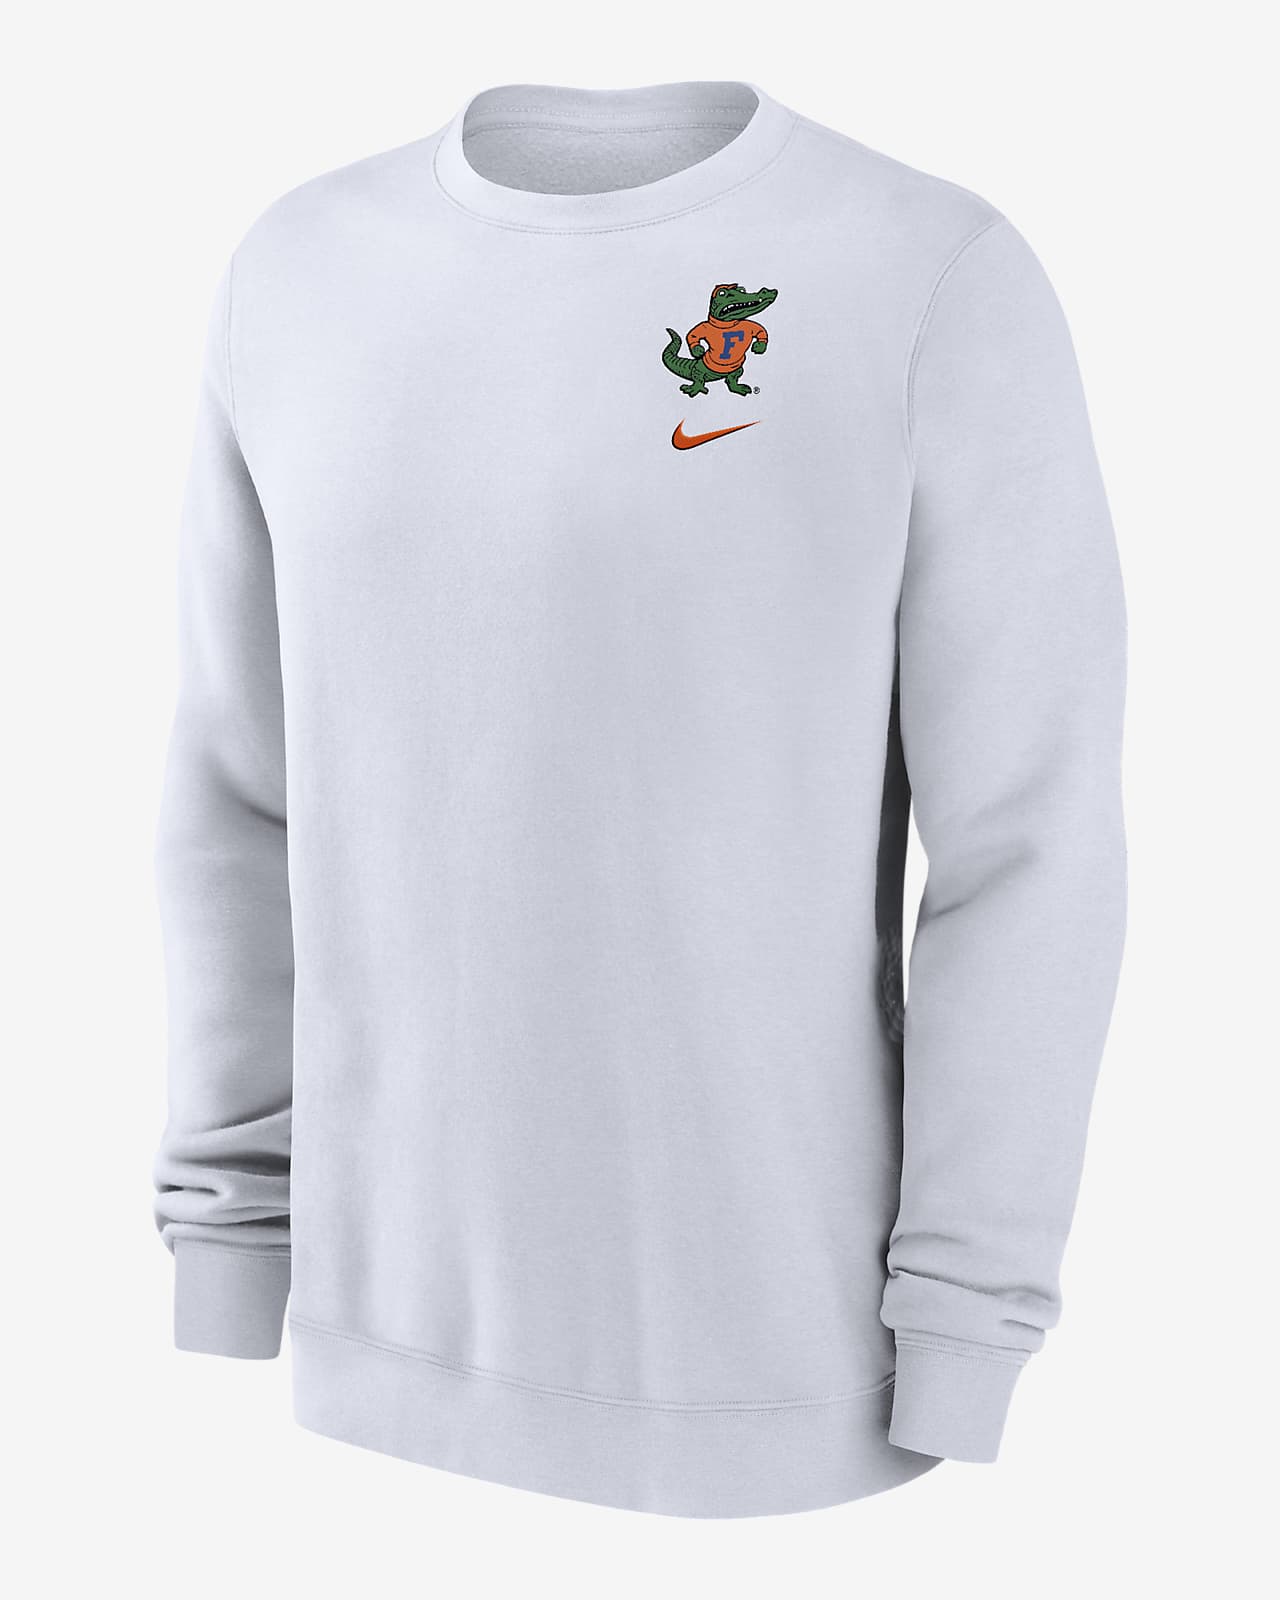 Florida Club Fleece Men's Nike College Sweatshirt